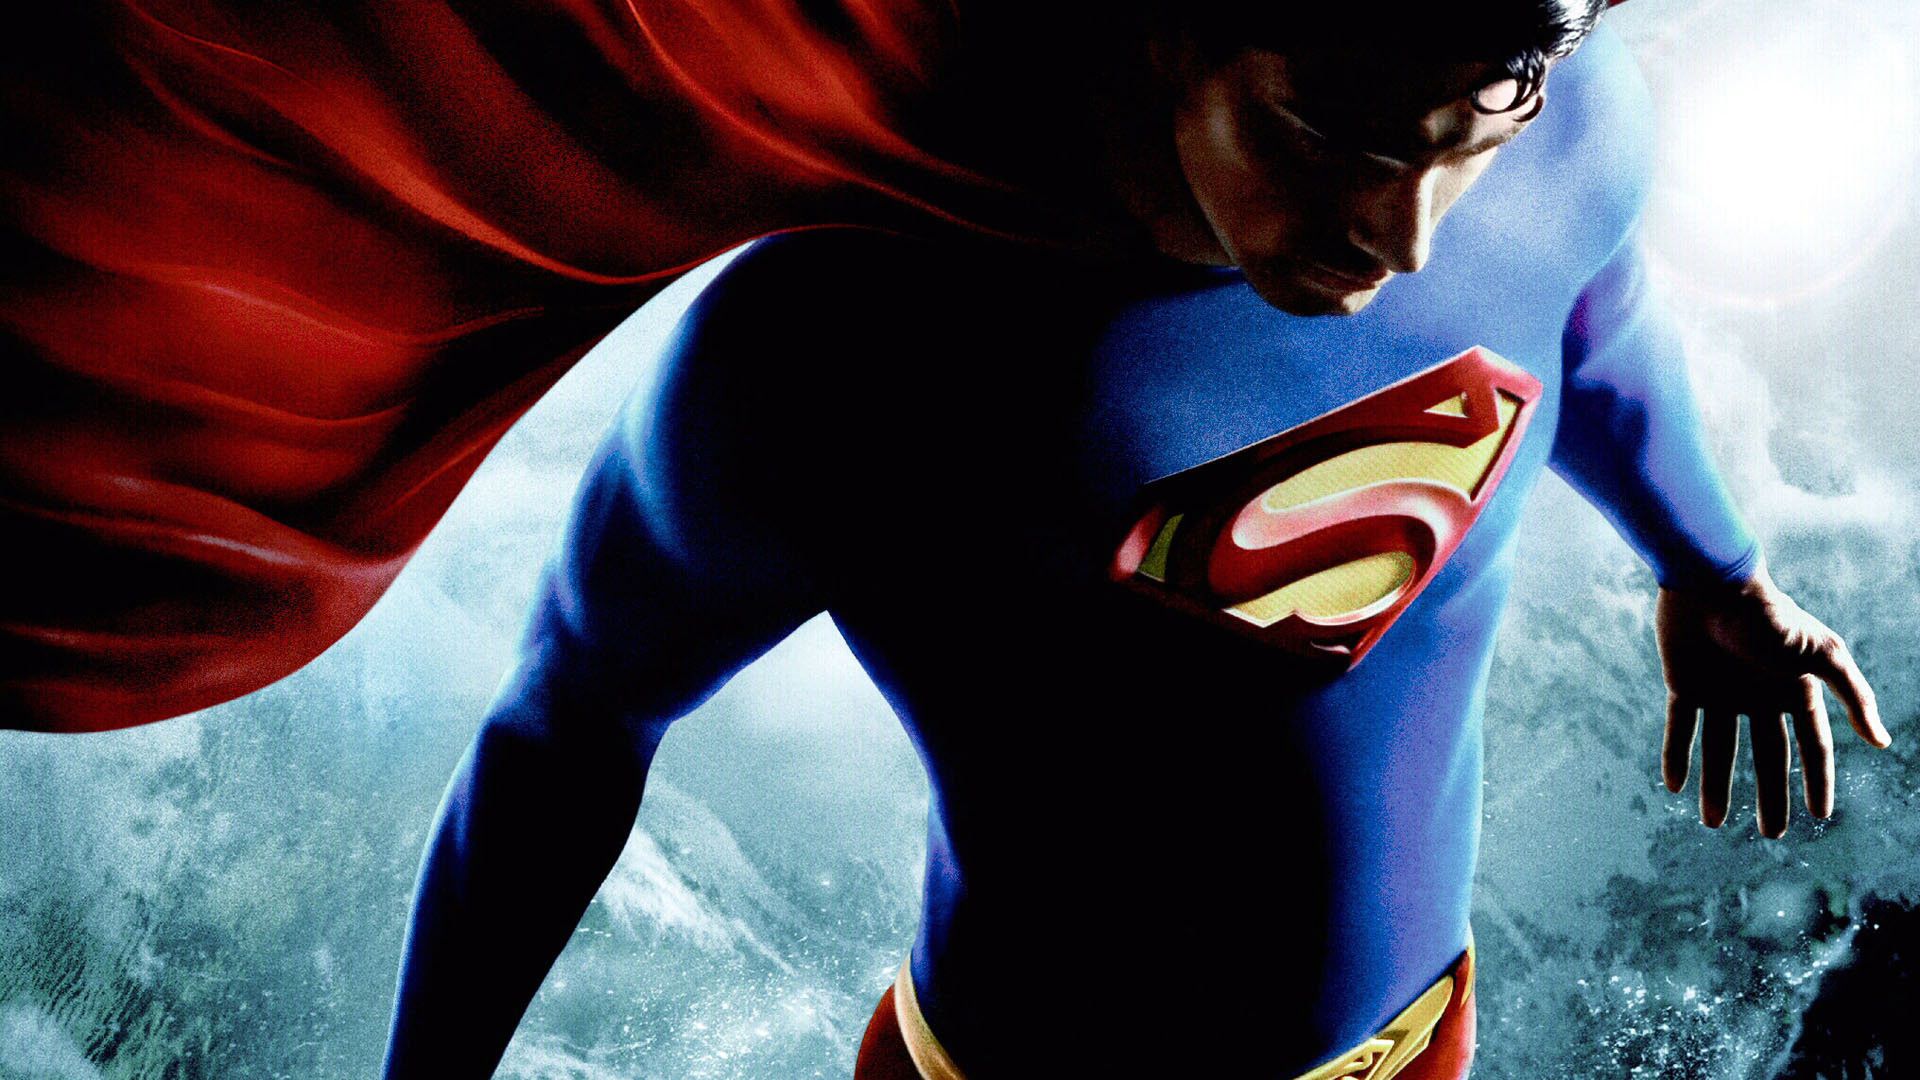 Man of Steel desktop wallpaper in high resolution - Superman movie